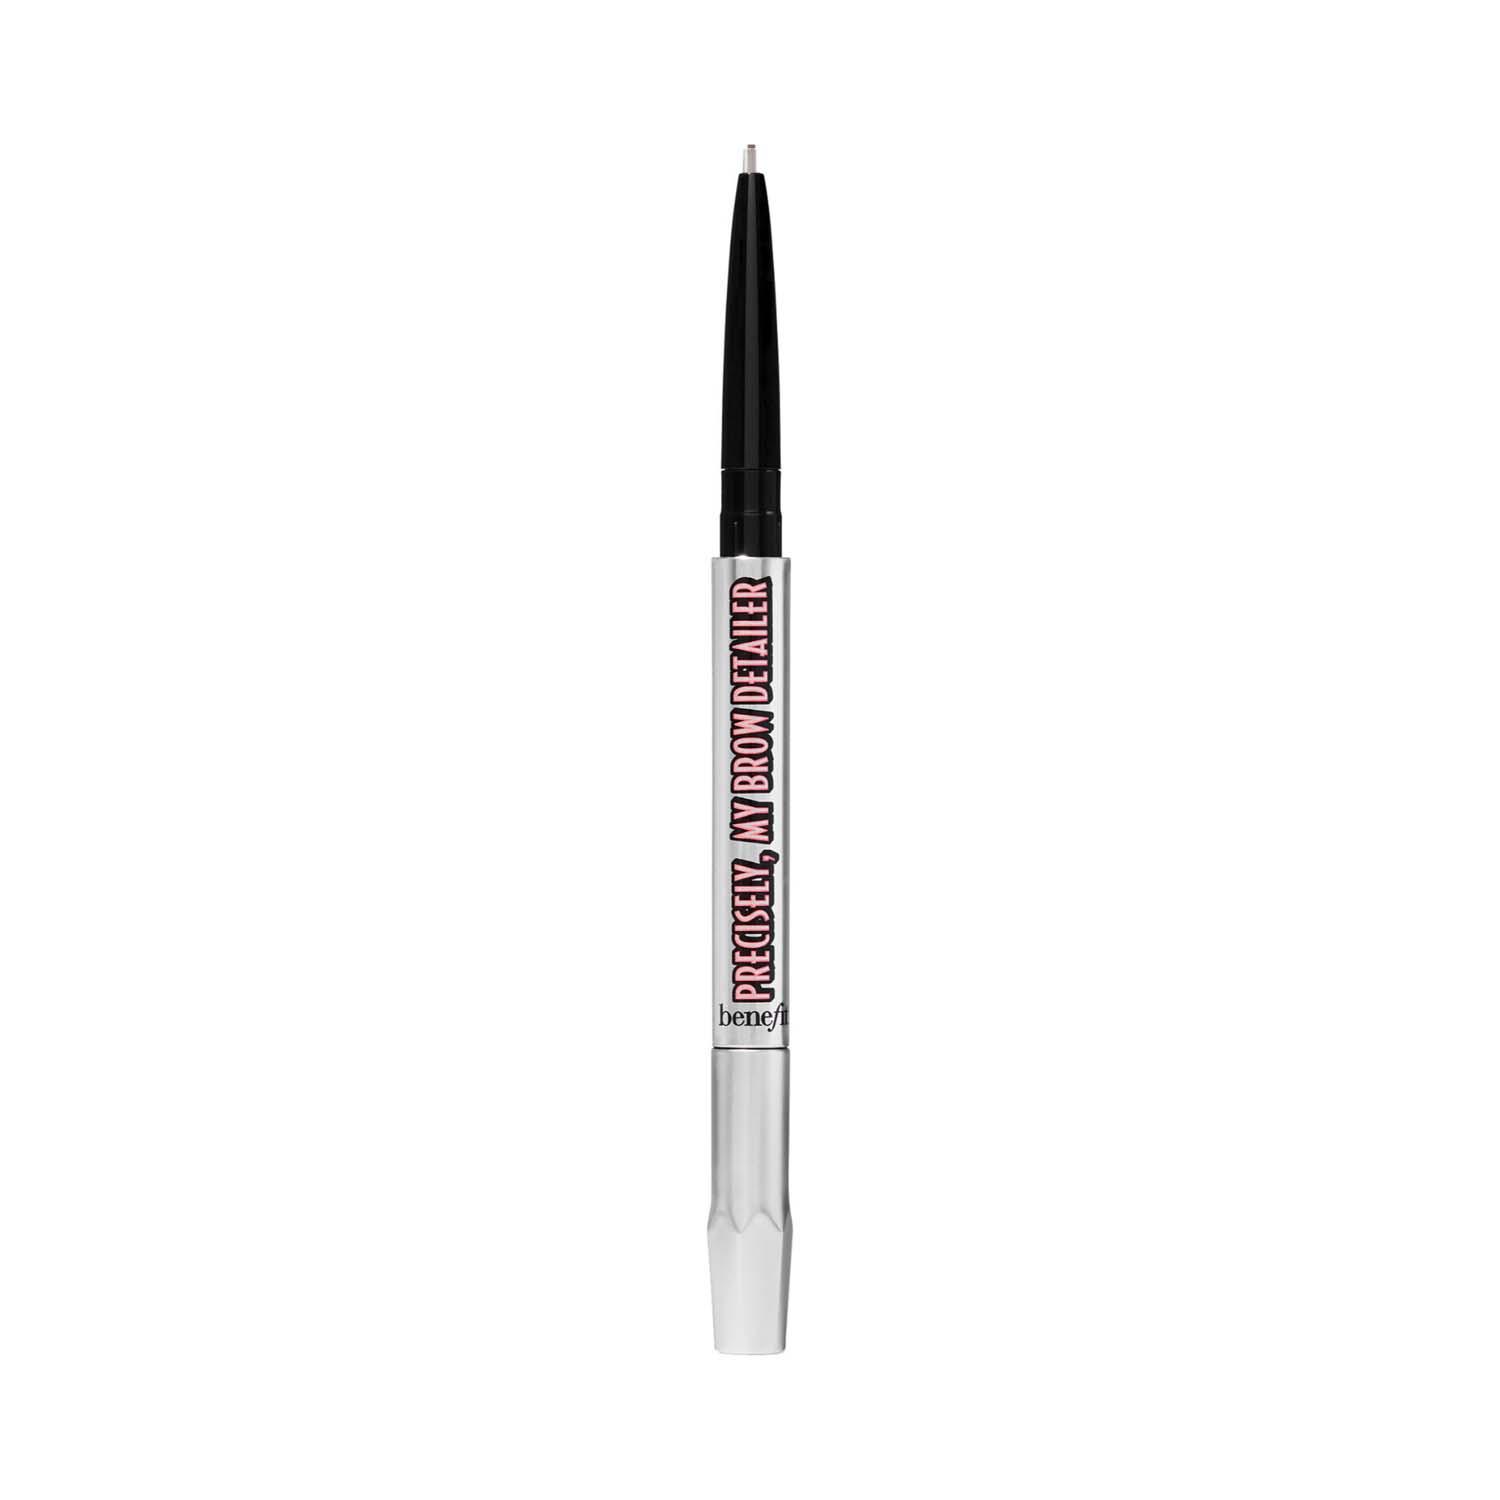 Benefit Cosmetics | Benefit Cosmetics Precisely, My Brow Detailer Eyebrow Pencil - 4 Warm Deep Brown (0.02 g)